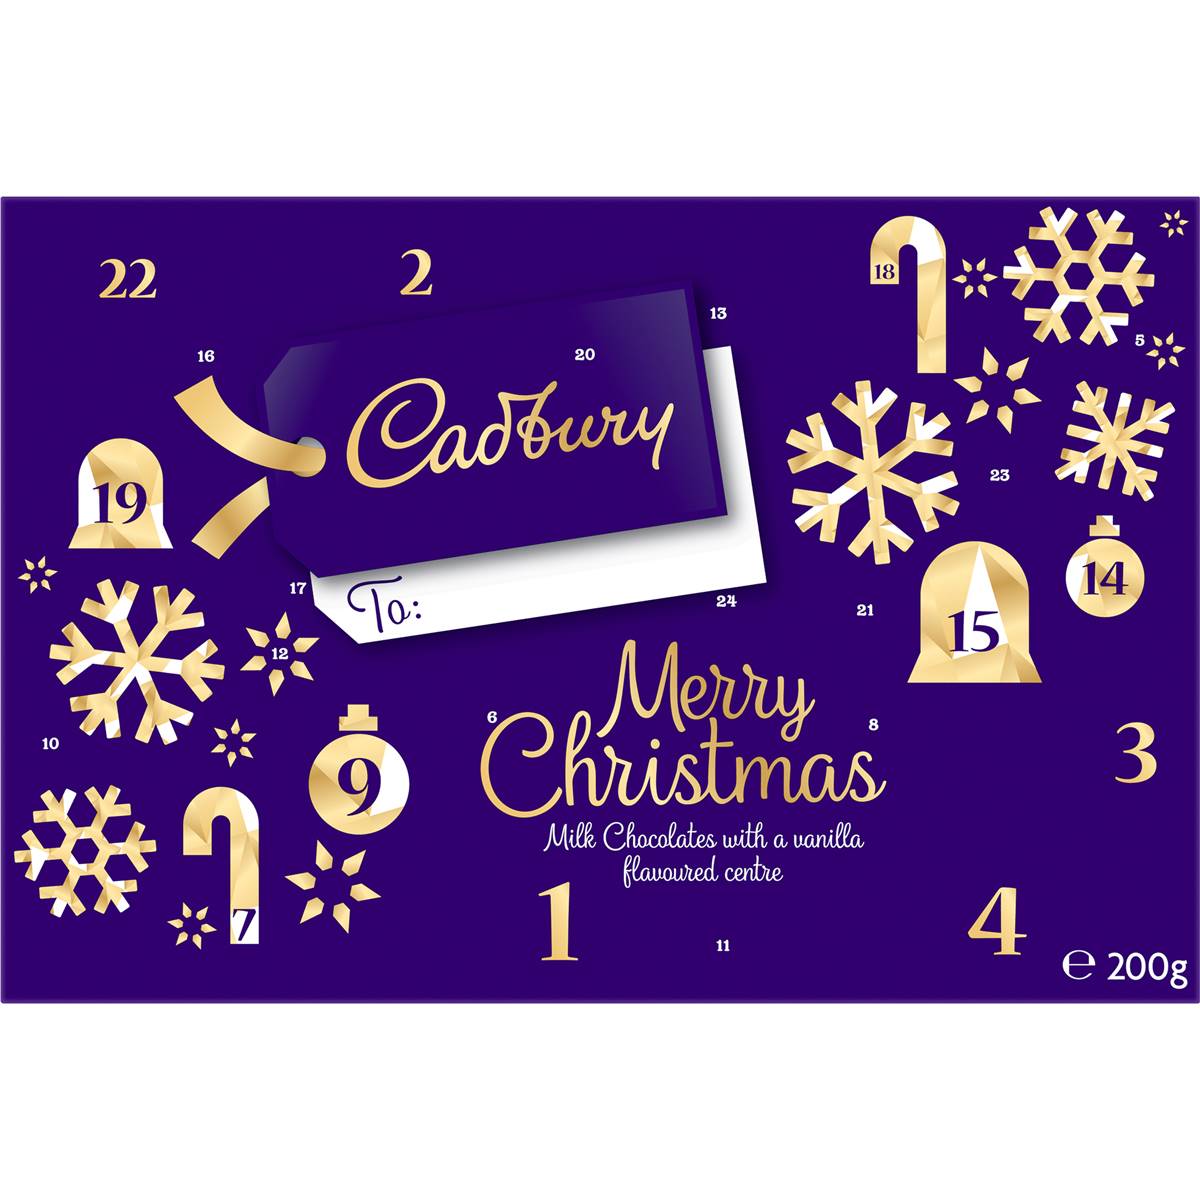 Calories in Cadbury Advent Calendar Calendar